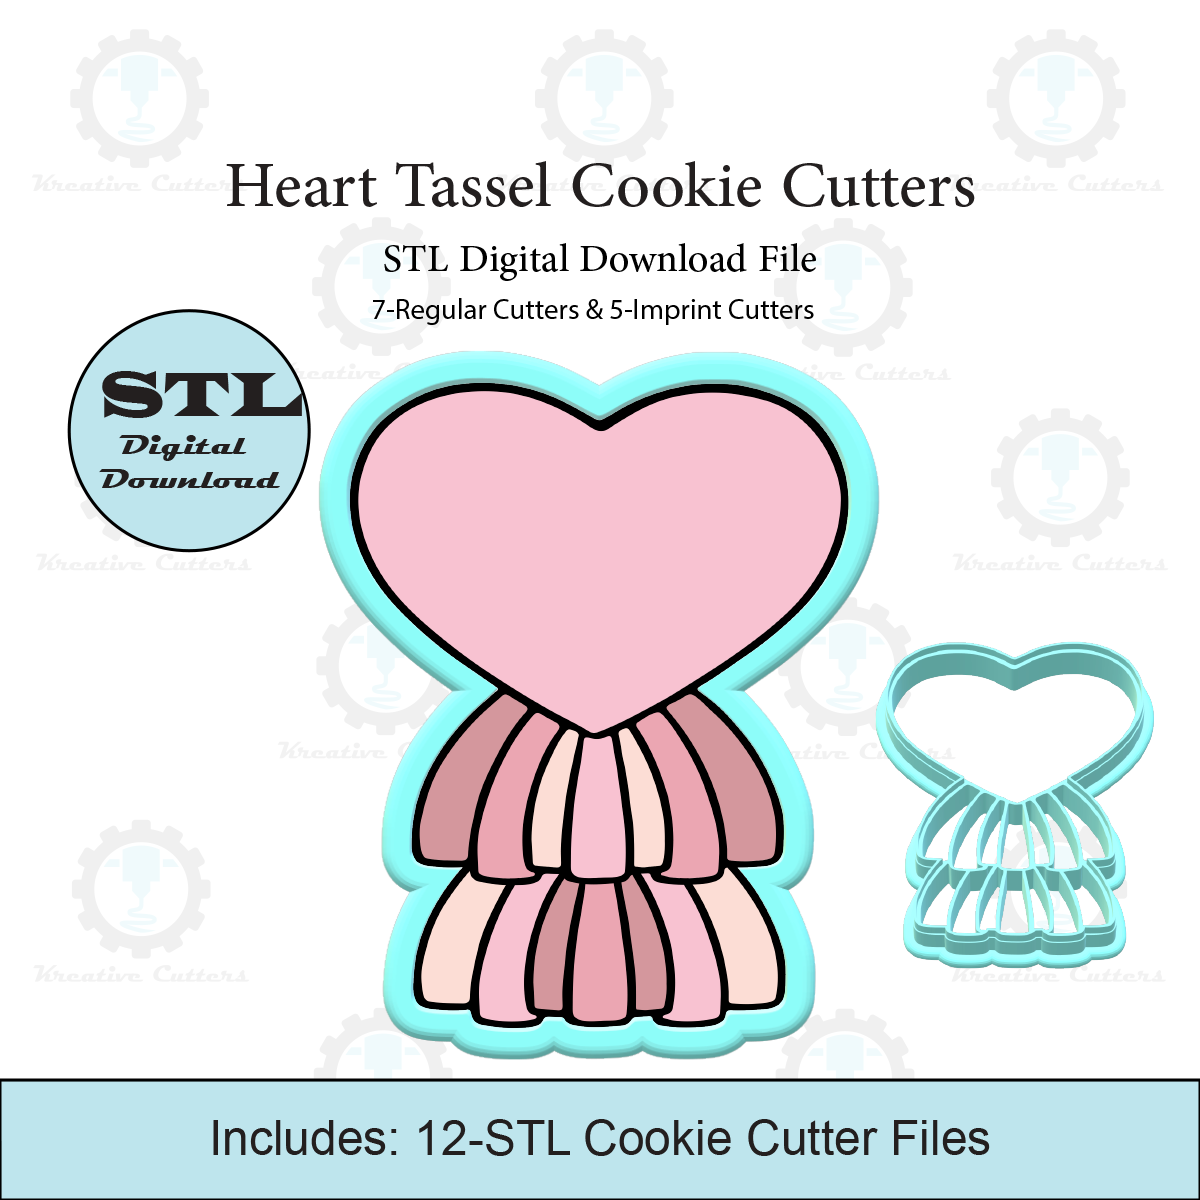 Heart Tassel Cookie Cutters | Standard & Imprint Cutters Included | STL Files